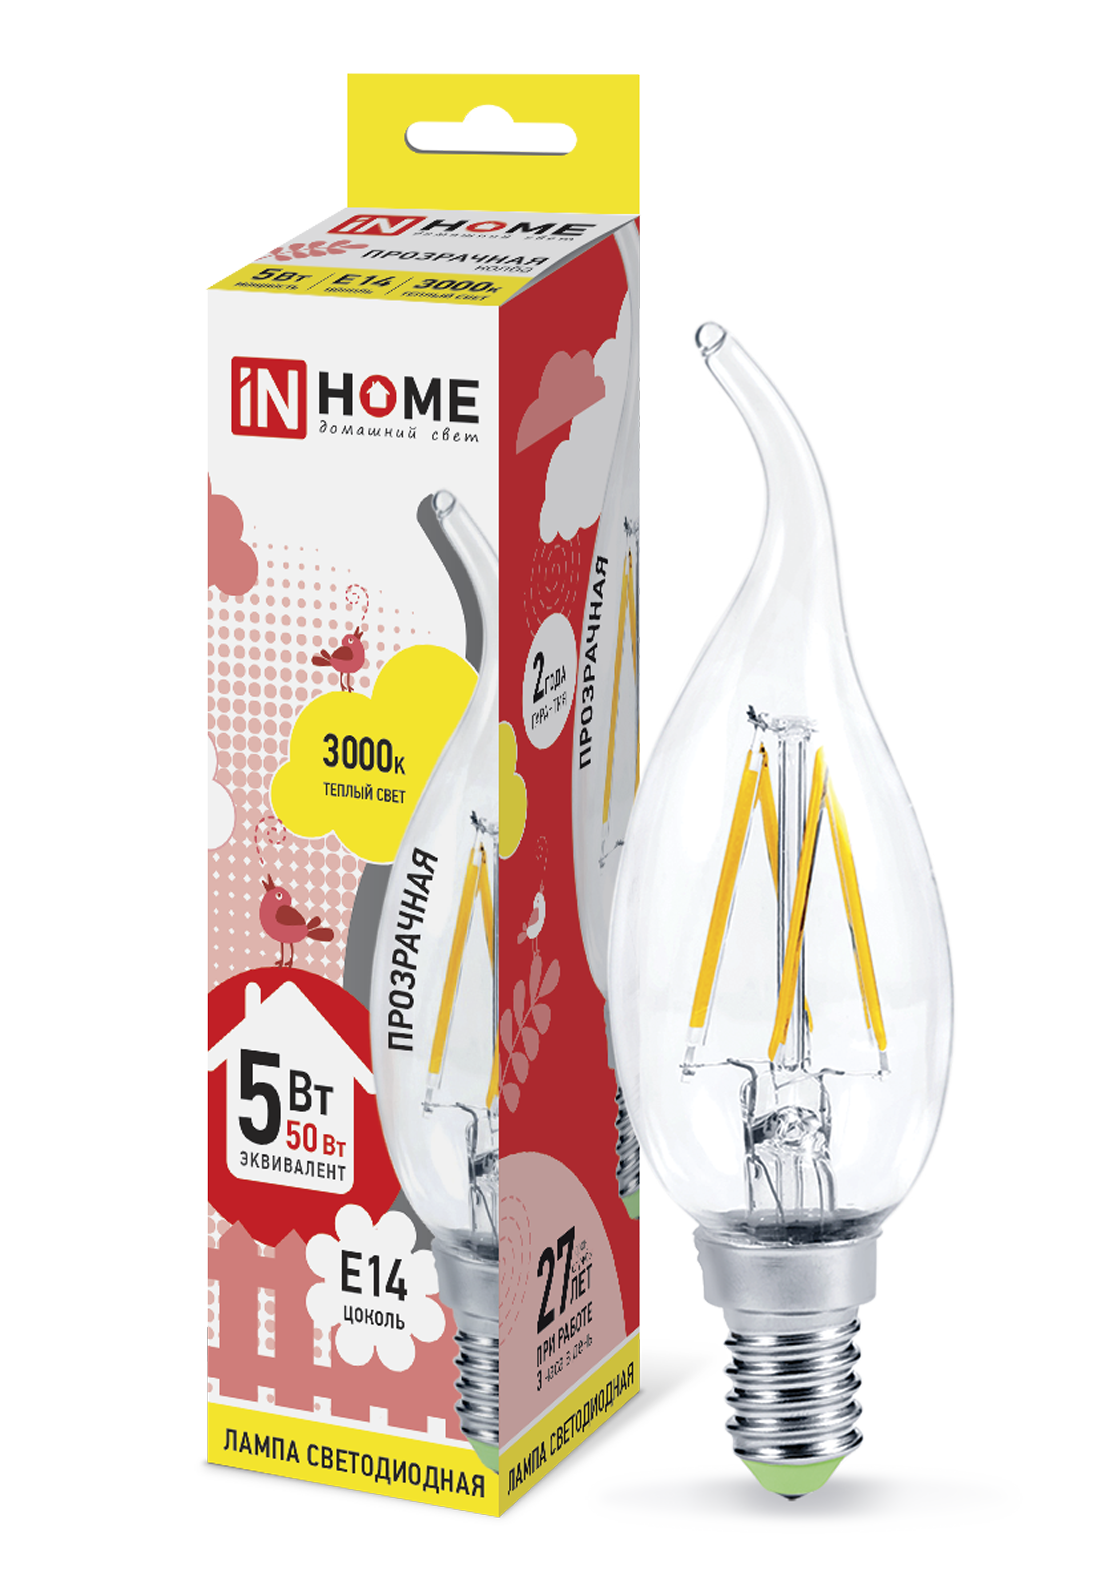 Купить лампа светодиодная led-свеча на ветру-deco 5вт 230в е14 3000к 450лм прозрачная in home, 100% качество, в наличии на L-ed.ru